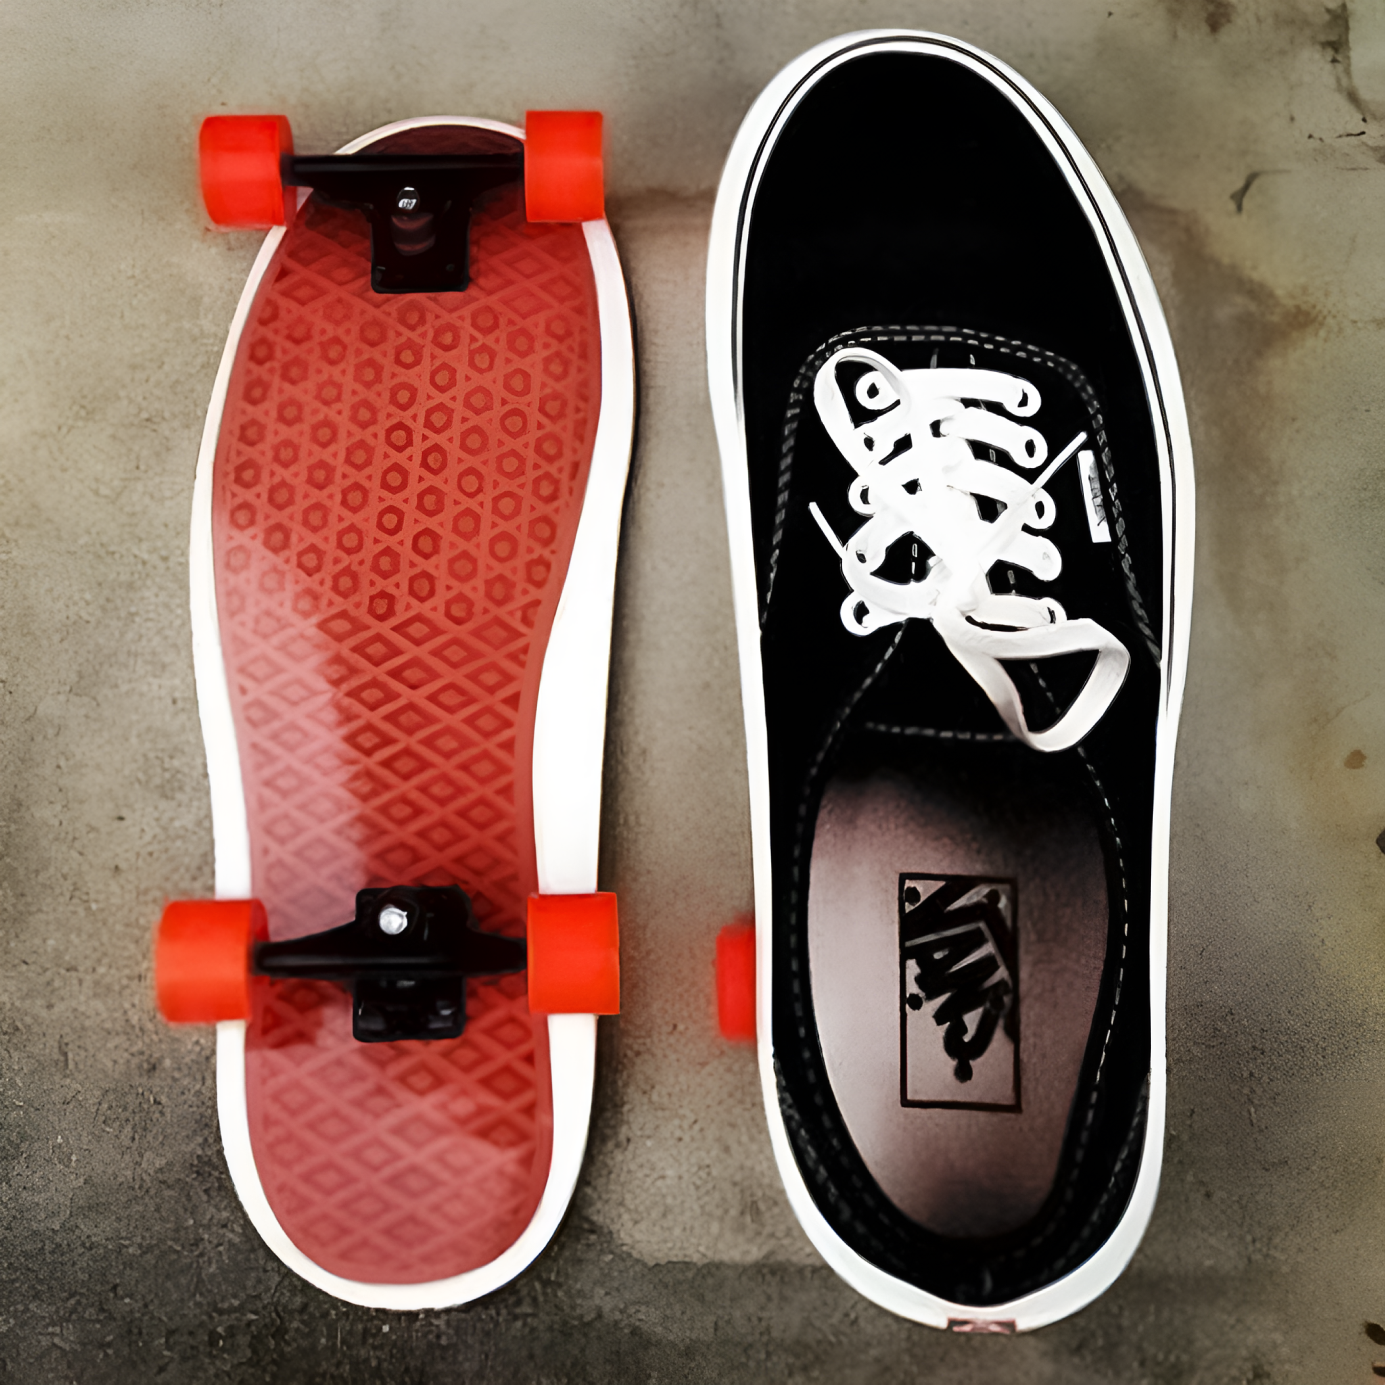 Кроссовки для скейта. Скейтборд Ванс. Кеды Ванс для скейтборда. Vans скейтборд шуз. Кеды vans Skateboarding Shoe 1.